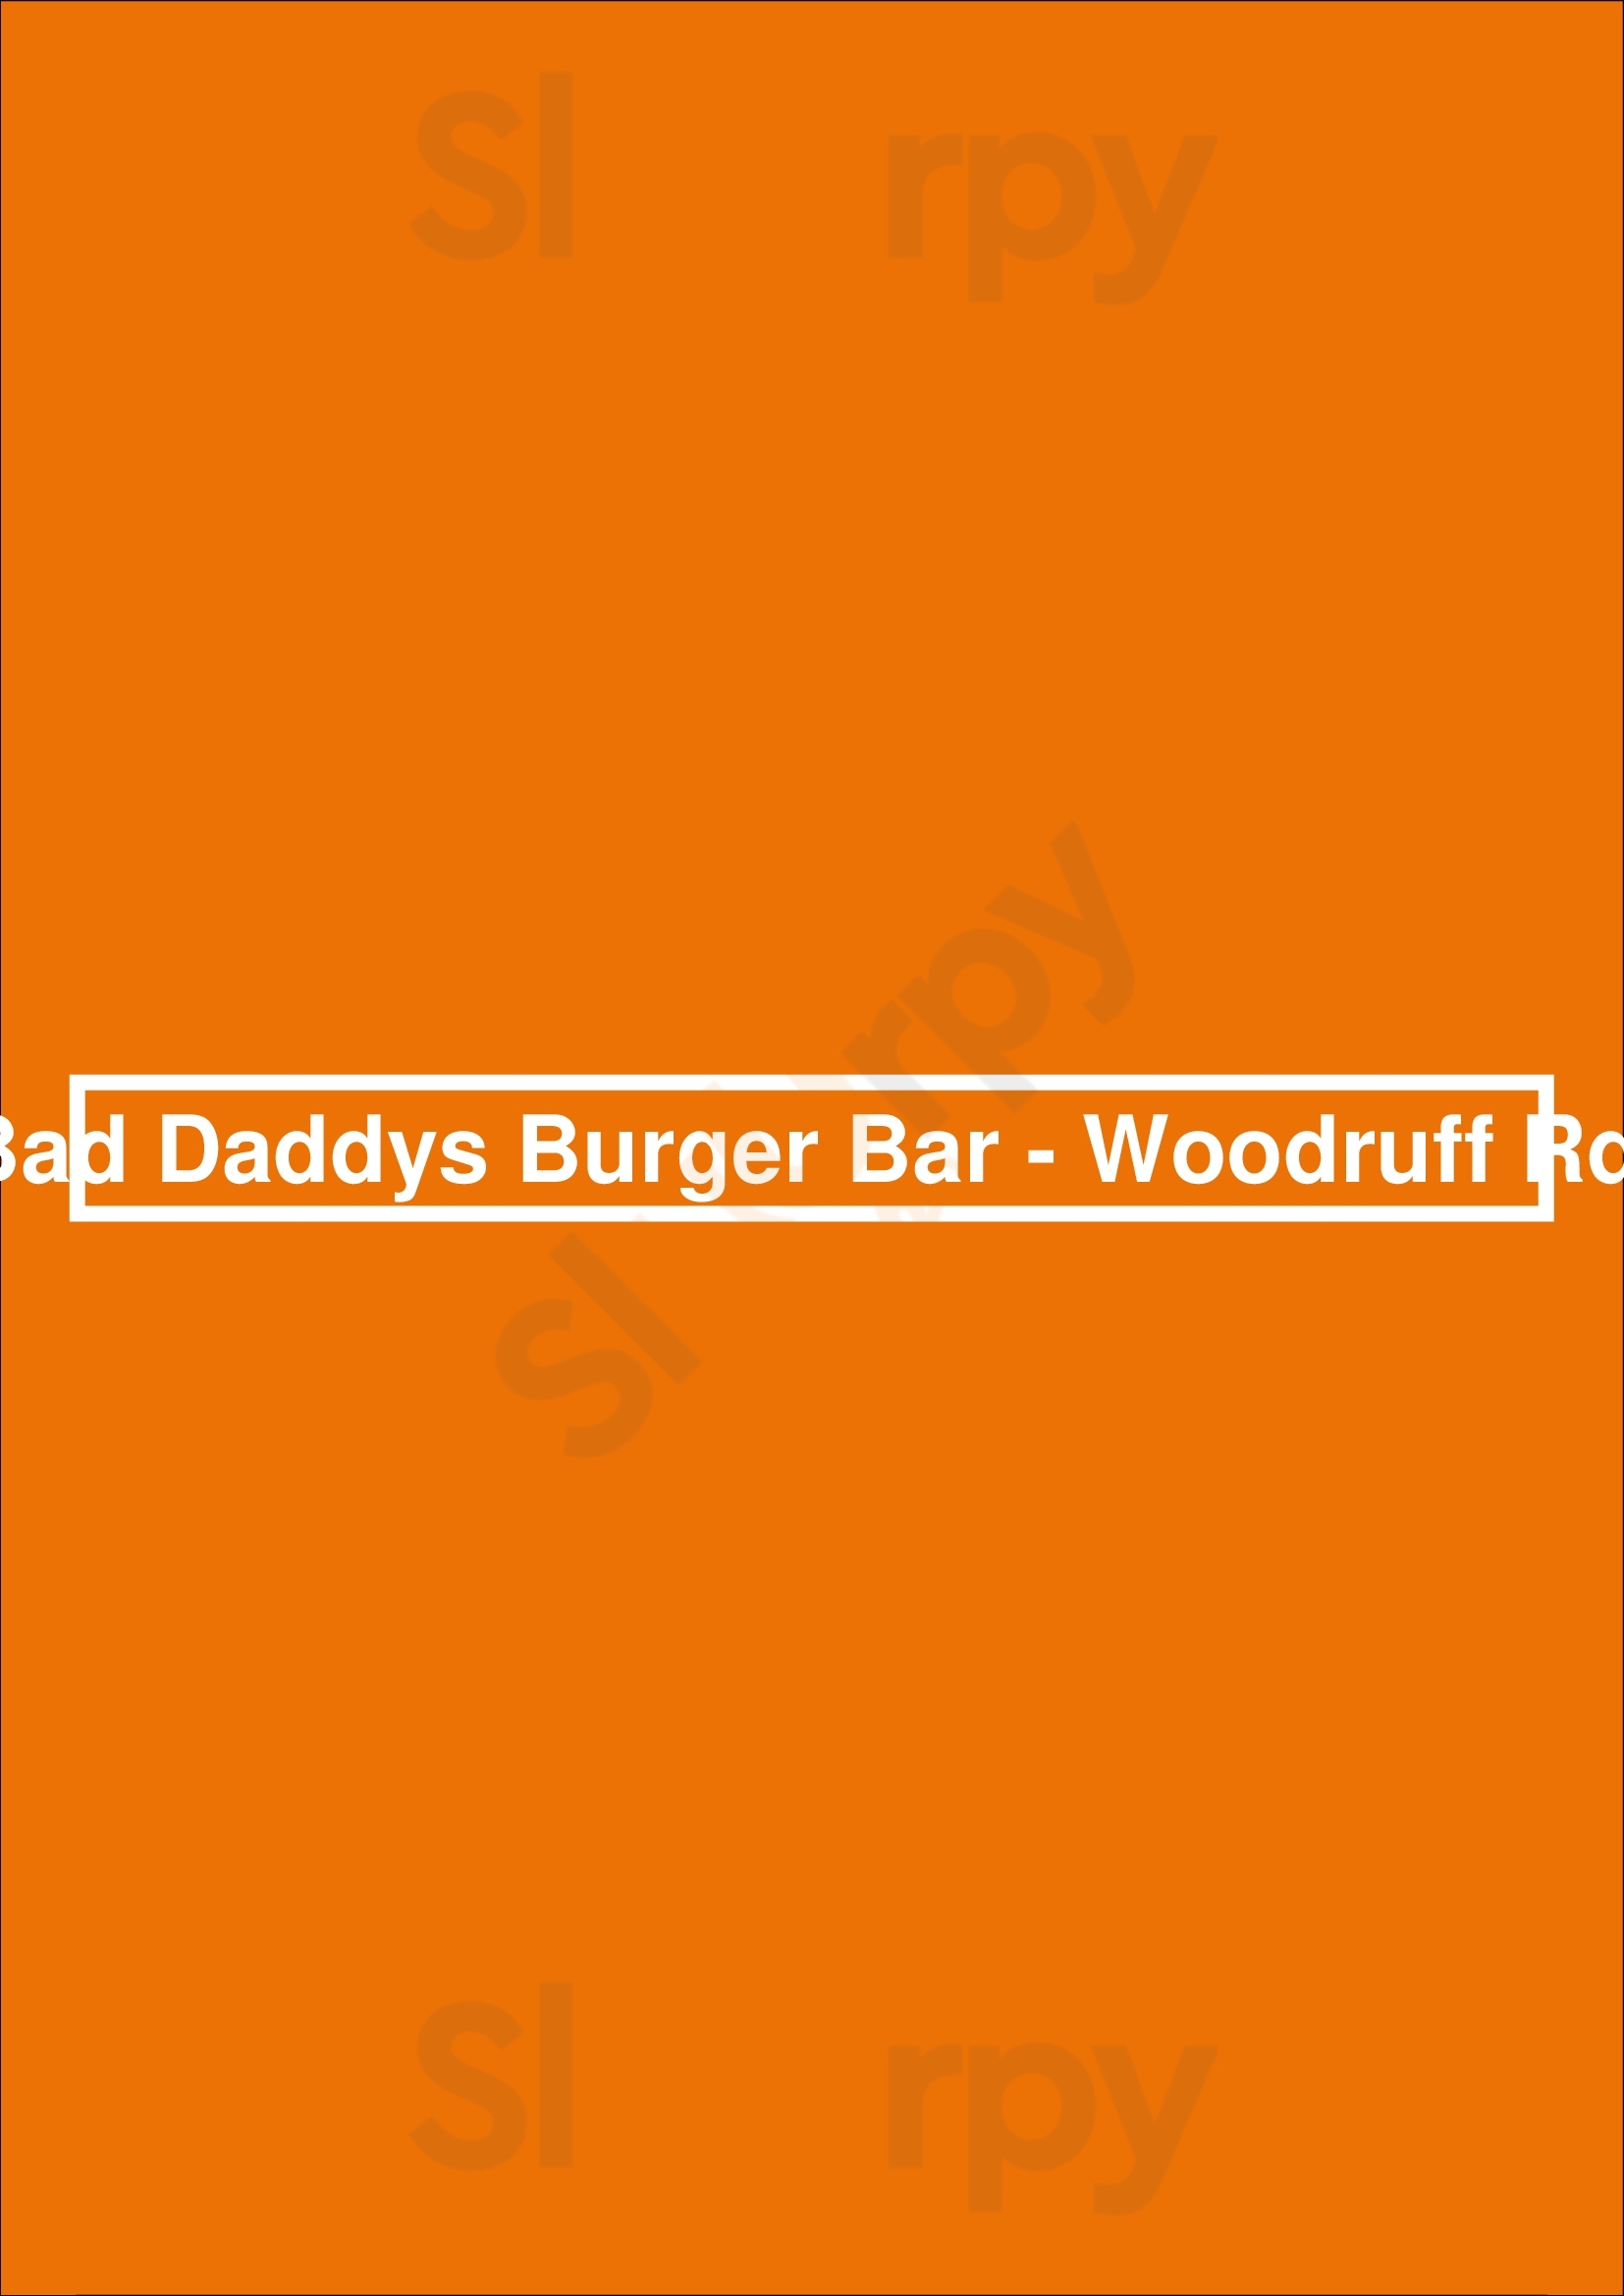 Bad Daddy's Burger Bar Greenville Menu - 1